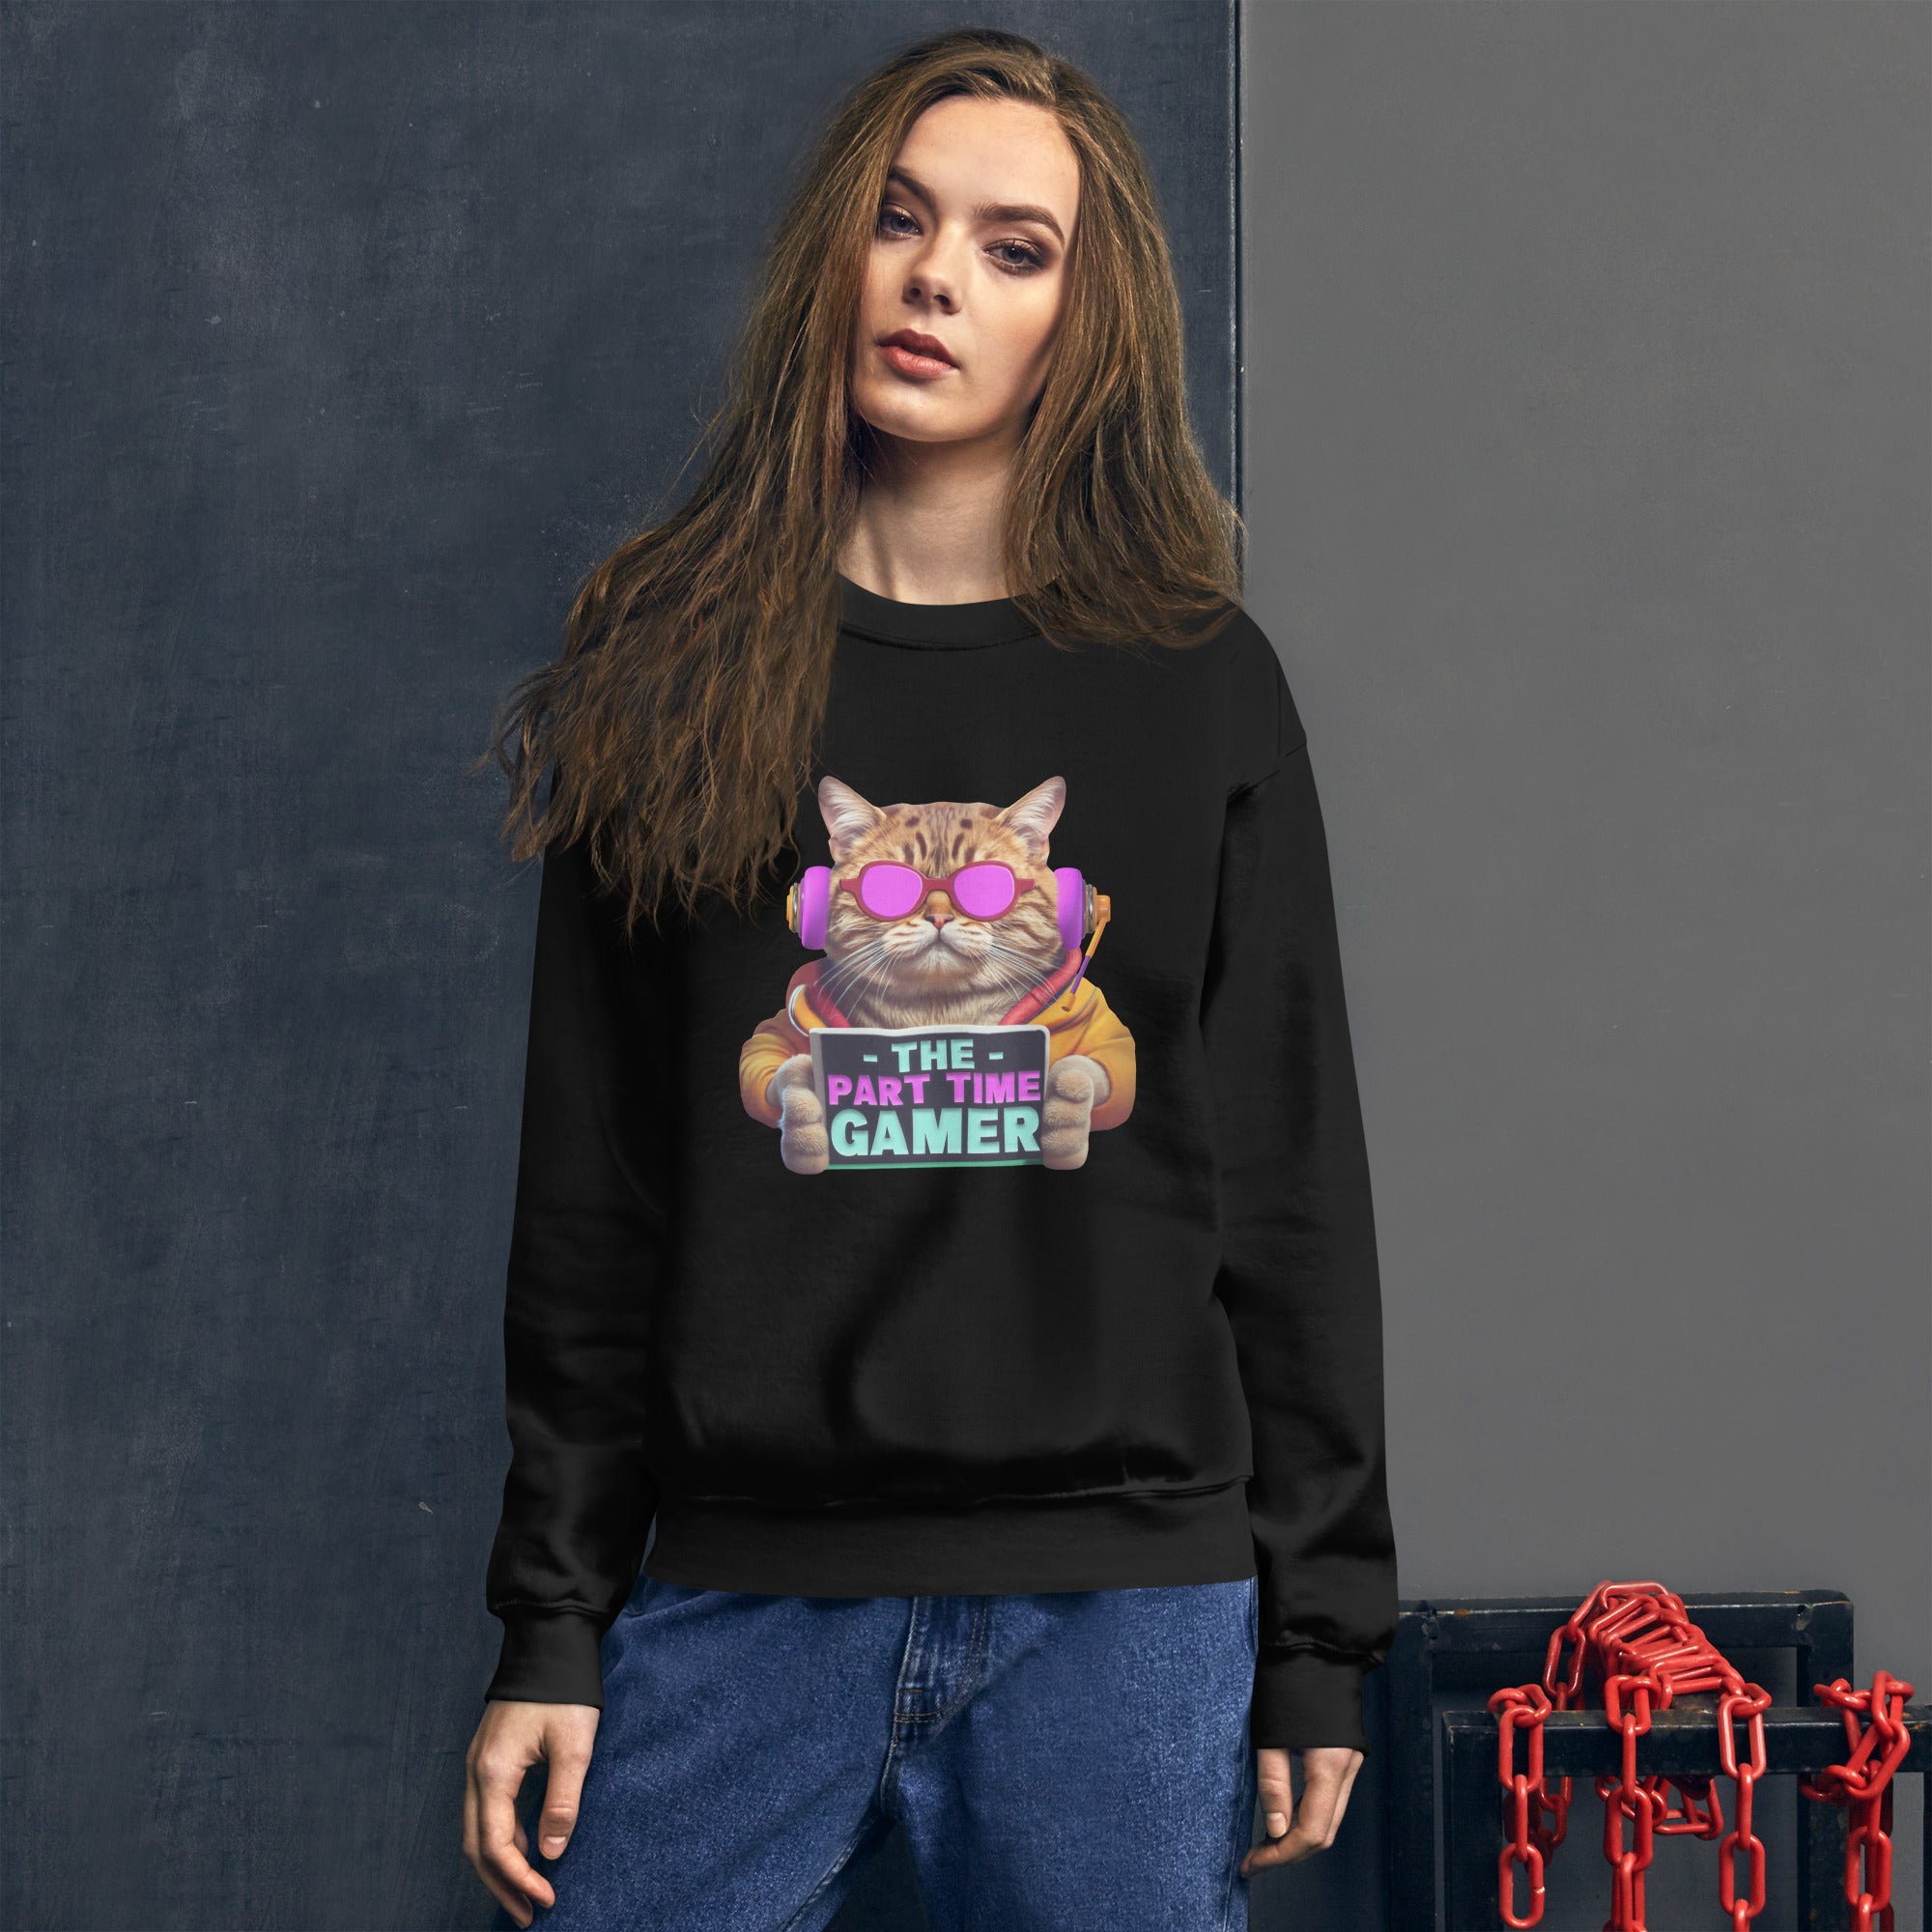 The Part Time Gamer Cat With Headphones Video Gaming Cat Lover Women's Sweatshirt